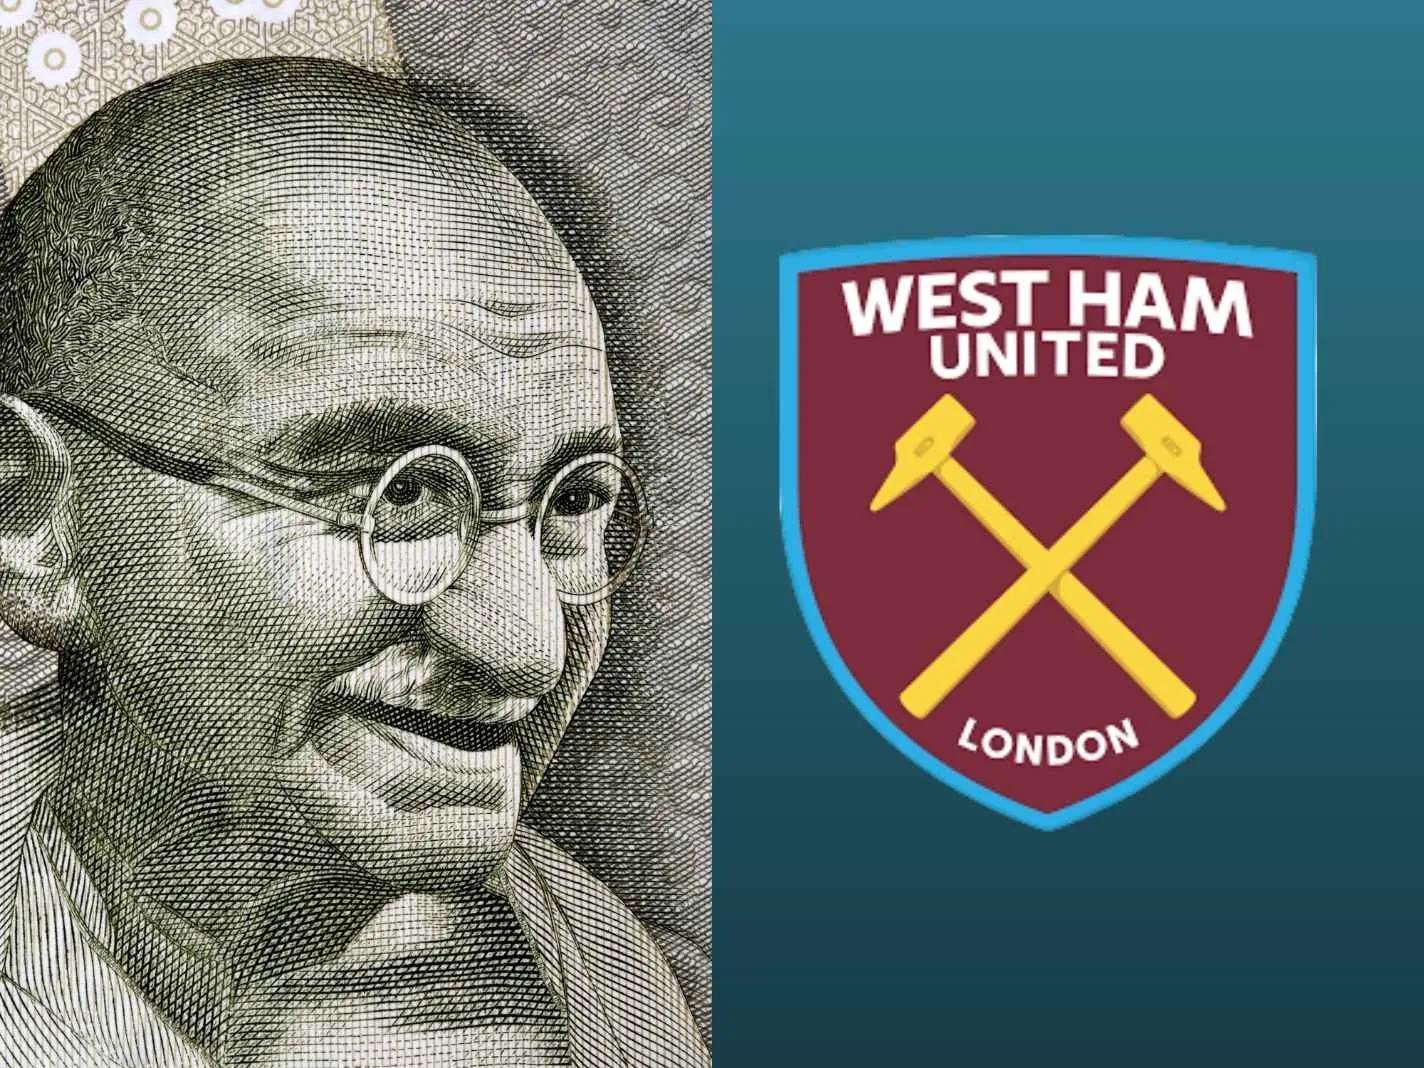 Was Mahatma Gandhi a West Ham supporter